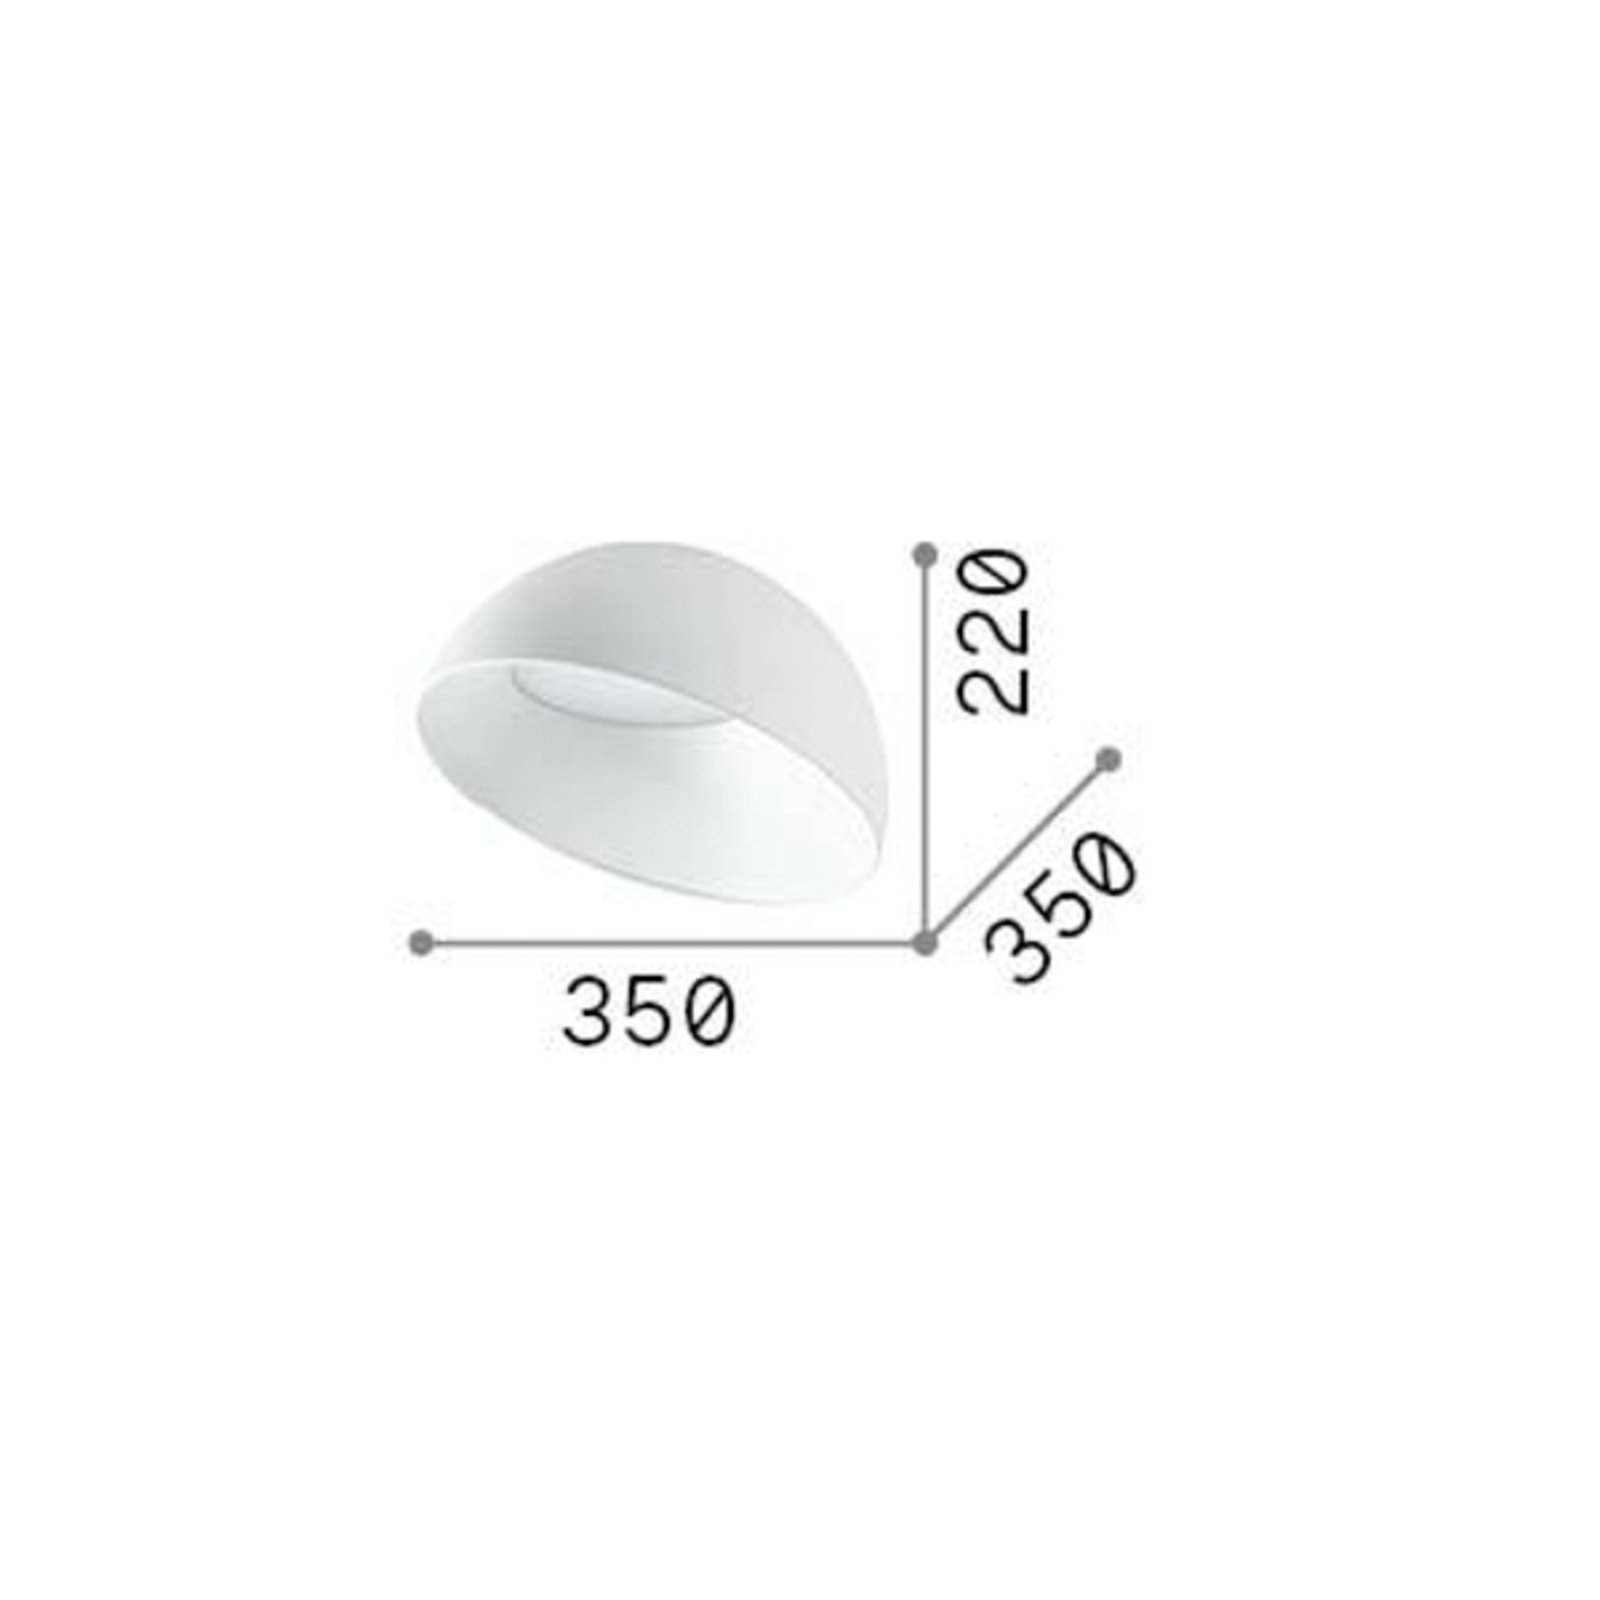 Ideal Lux LED ceiling light Corolla-2, white, metal, Ø 35 cm